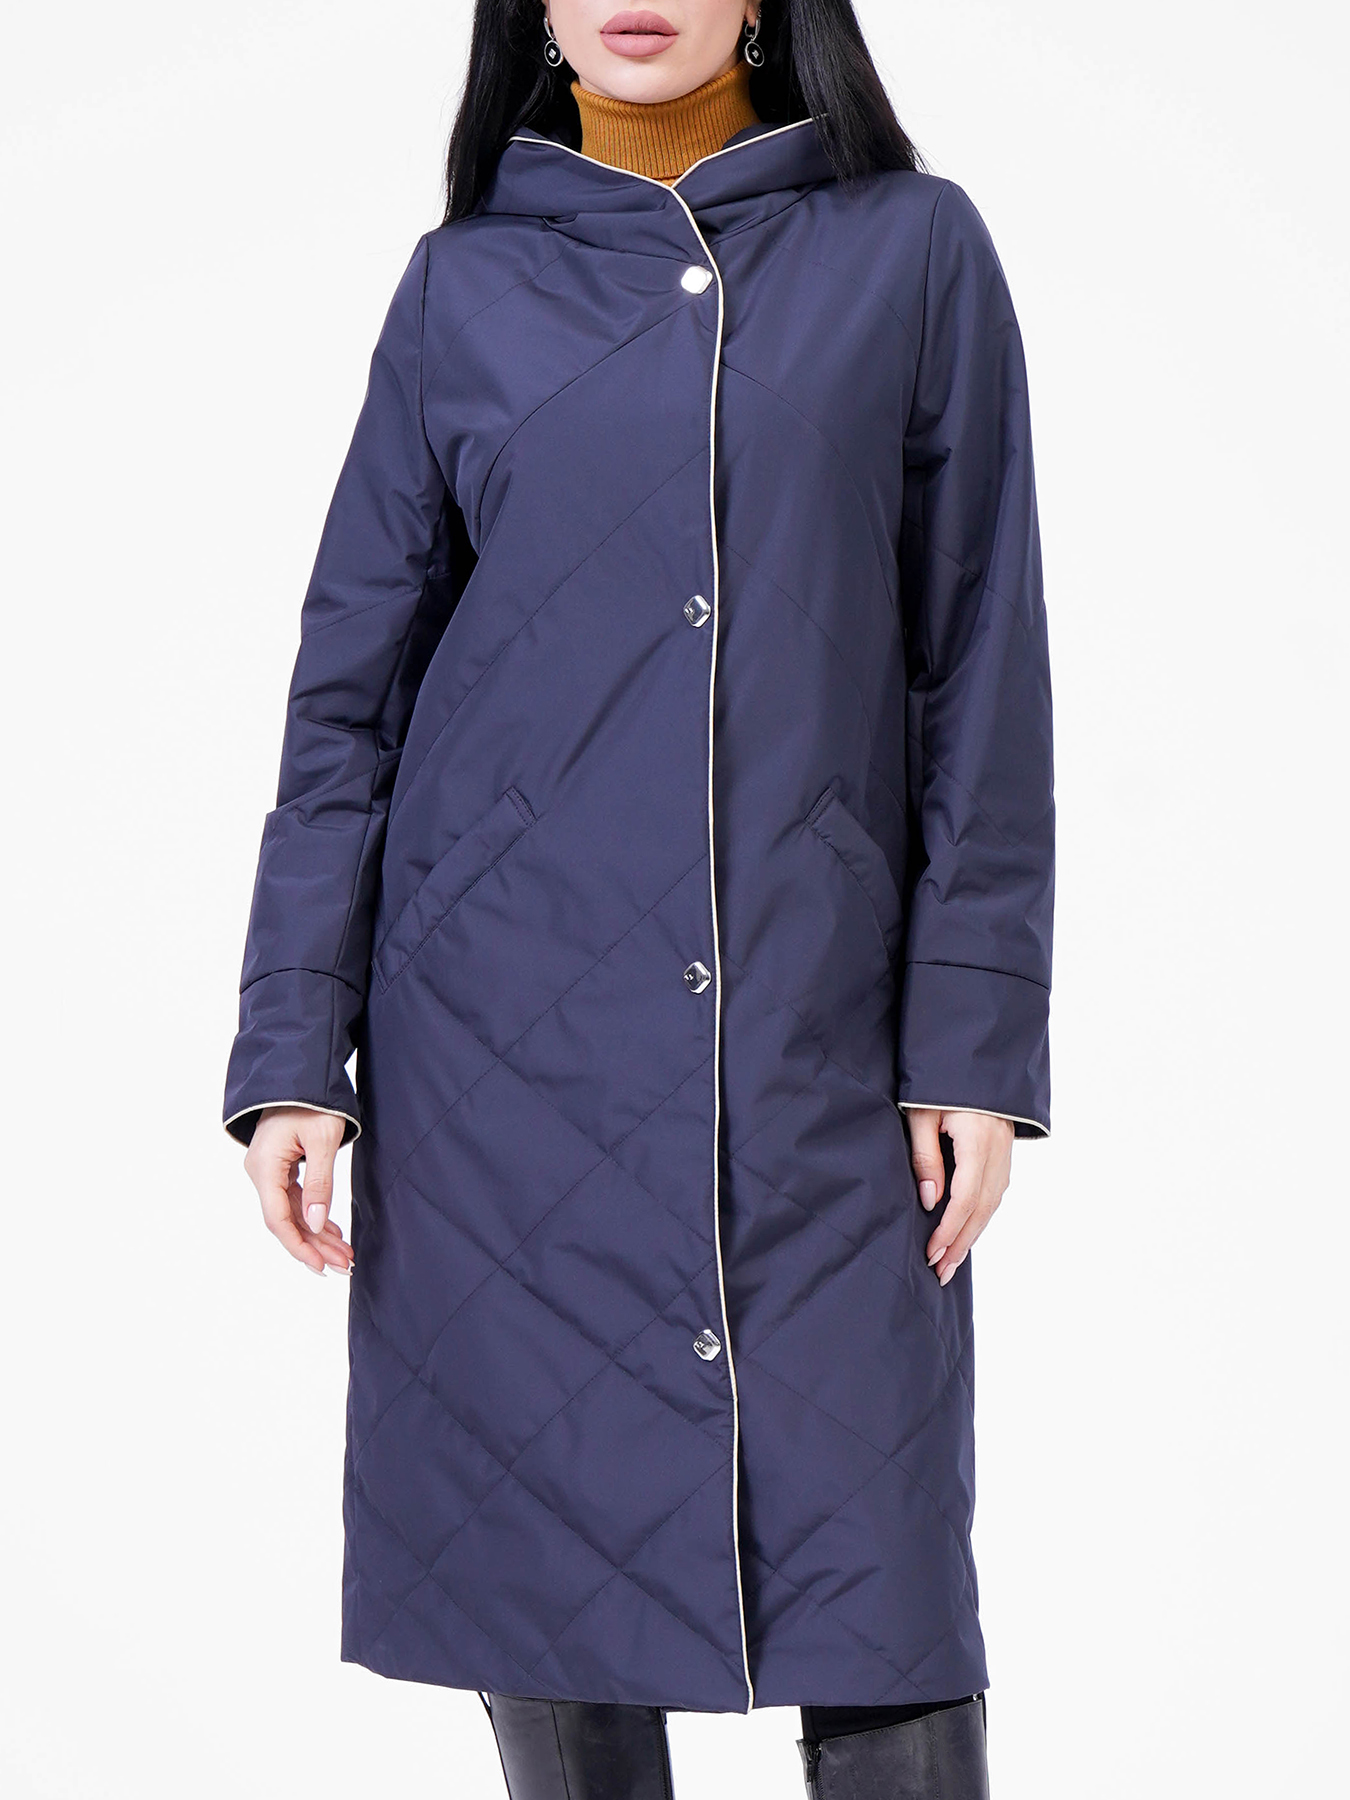 Пальто Maritta 418364-021, цвет темно-синий, размер 46 - фото 1